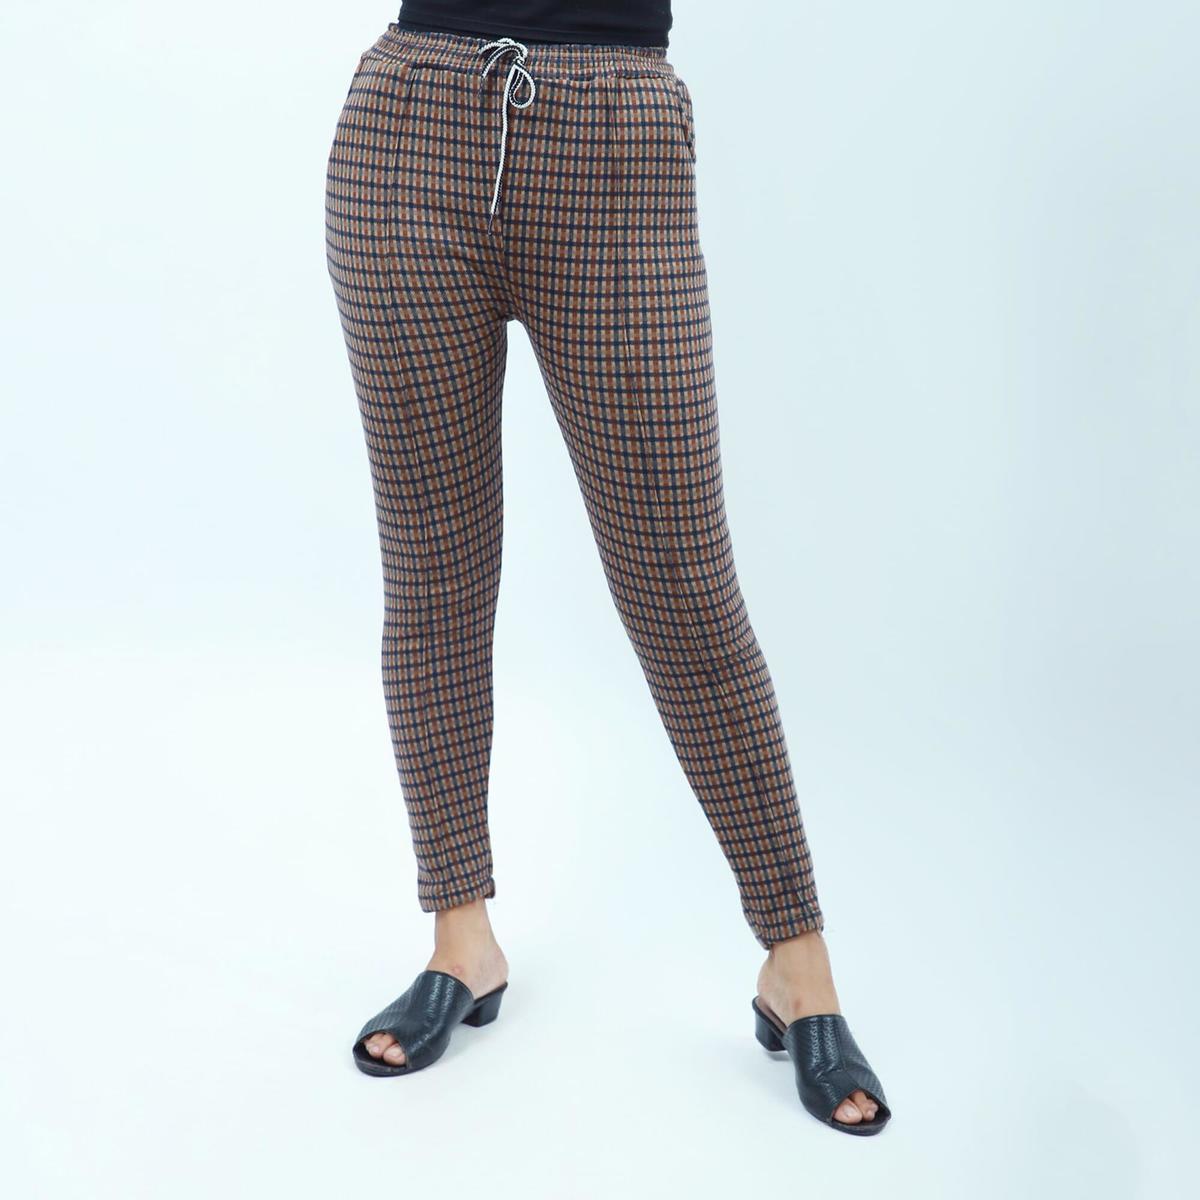 multicolor cotton printed side pocket design leggings for women